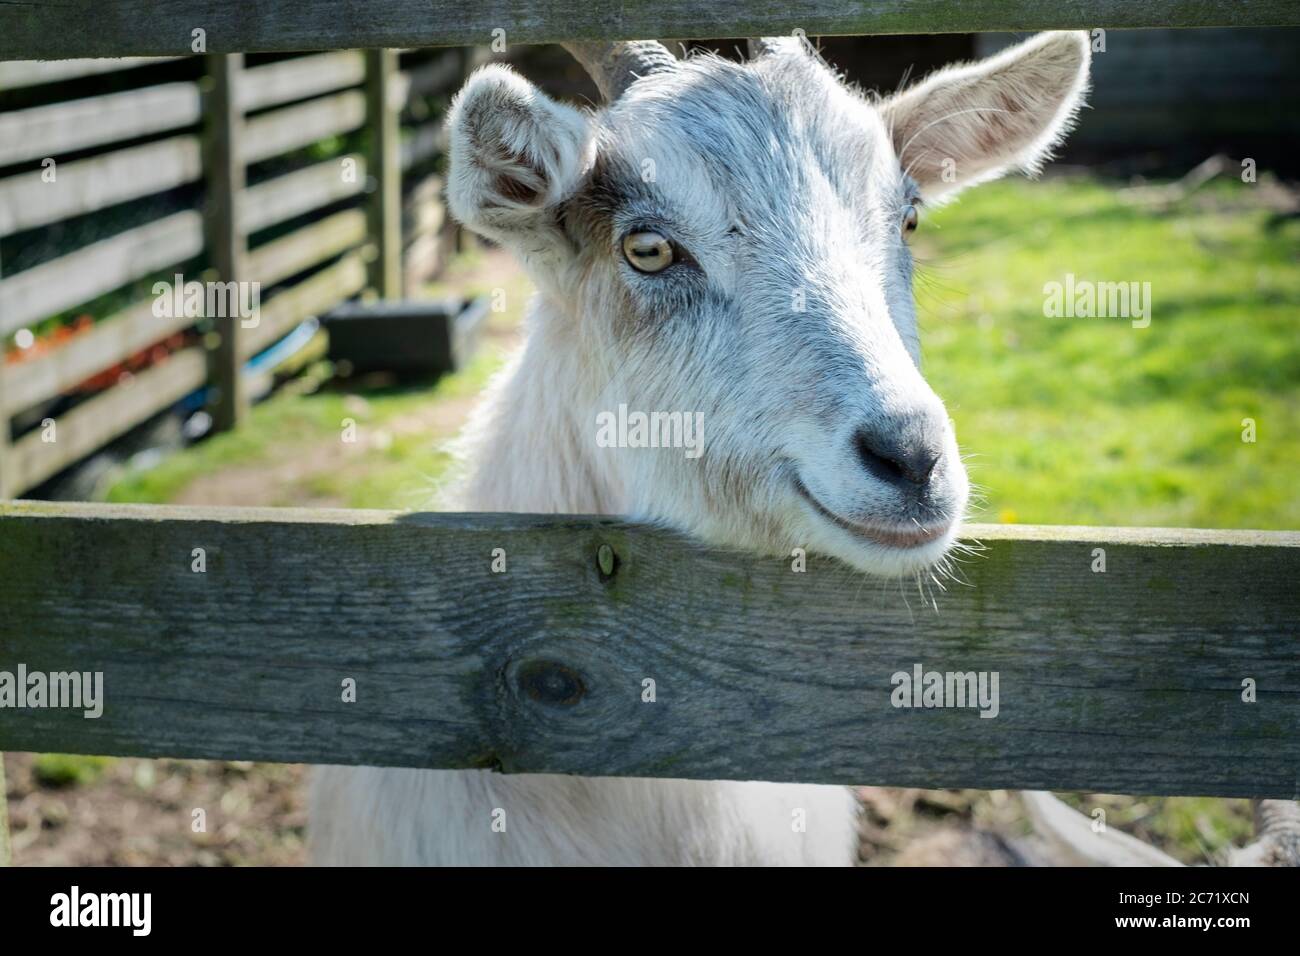 Goat peering over fence Stock Photo